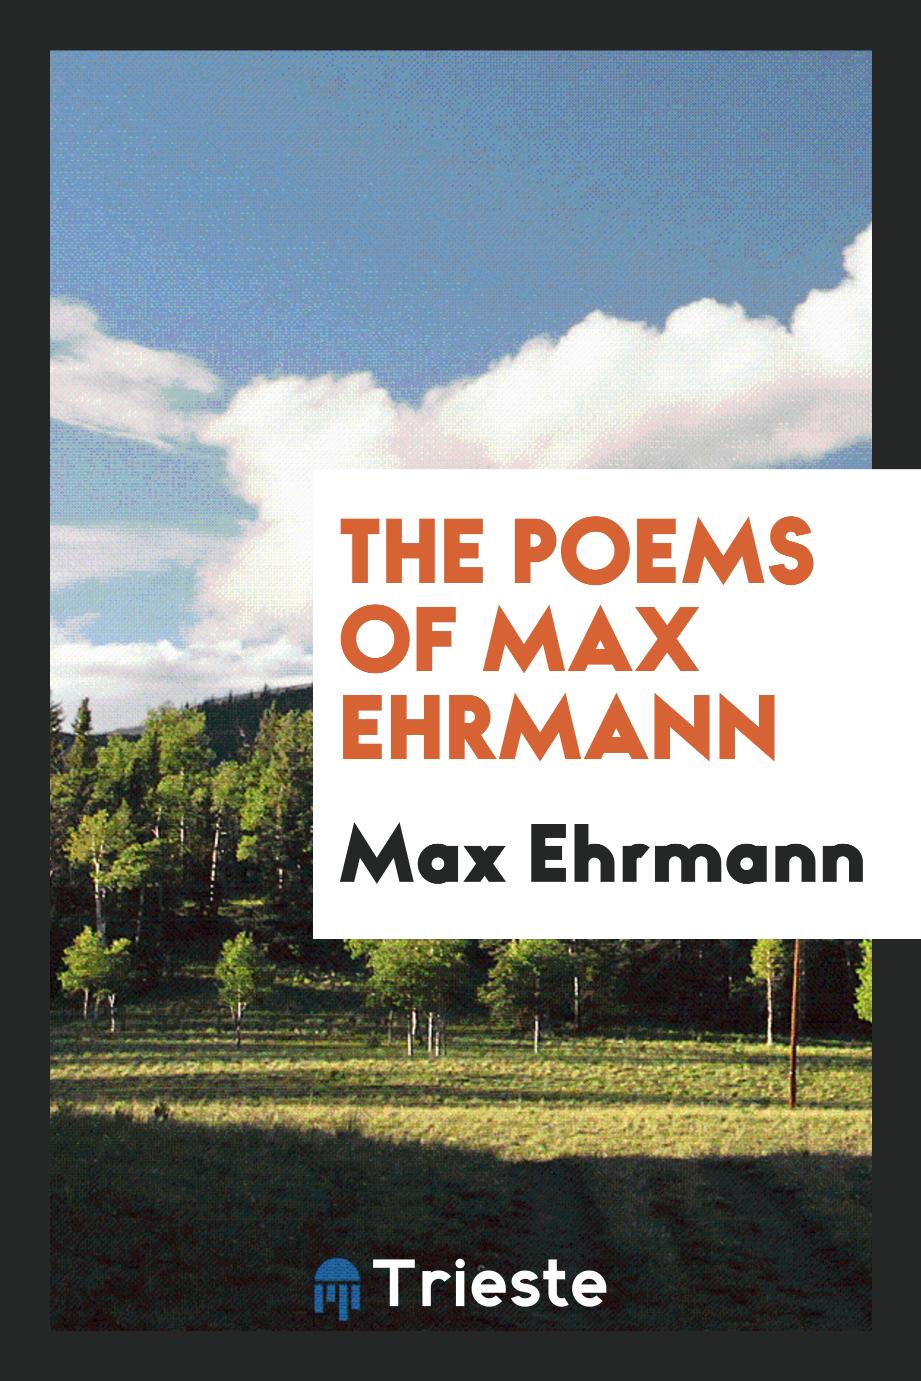 The poems of Max Ehrmann